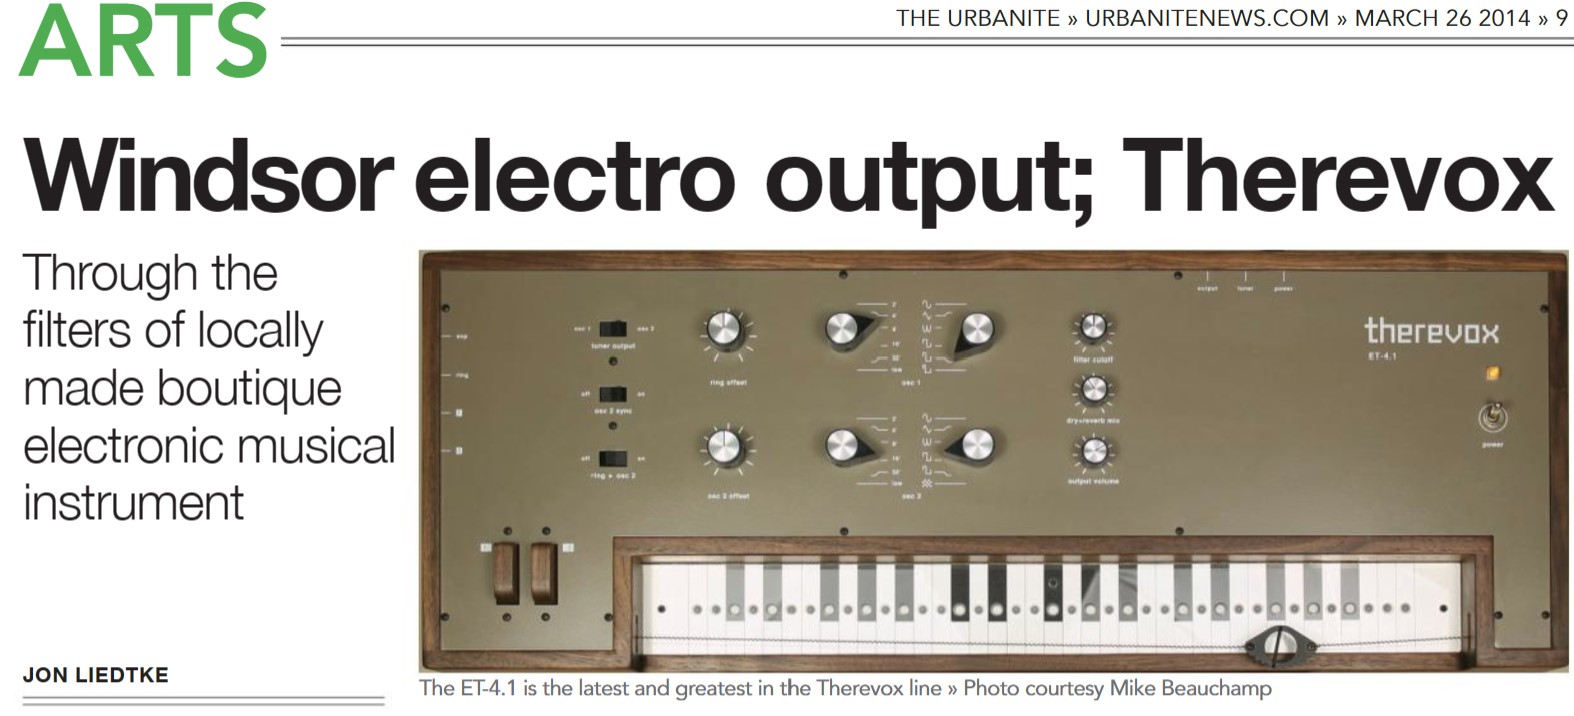 The Urbanite: Windsor electro output; Therevox